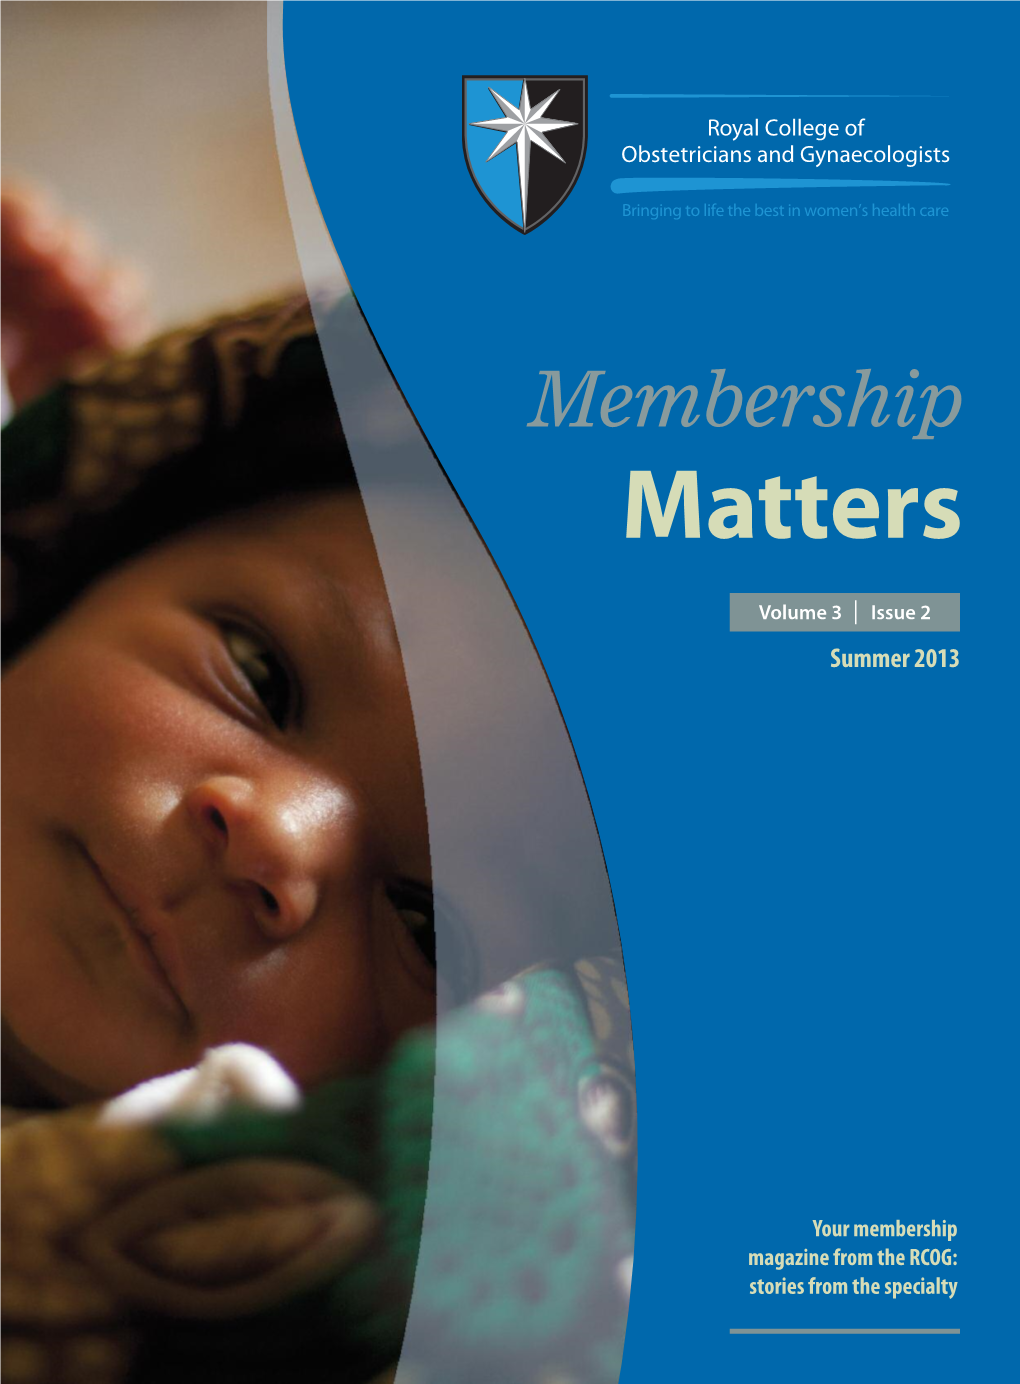 Membership Matters, Volume 3 Issue 2